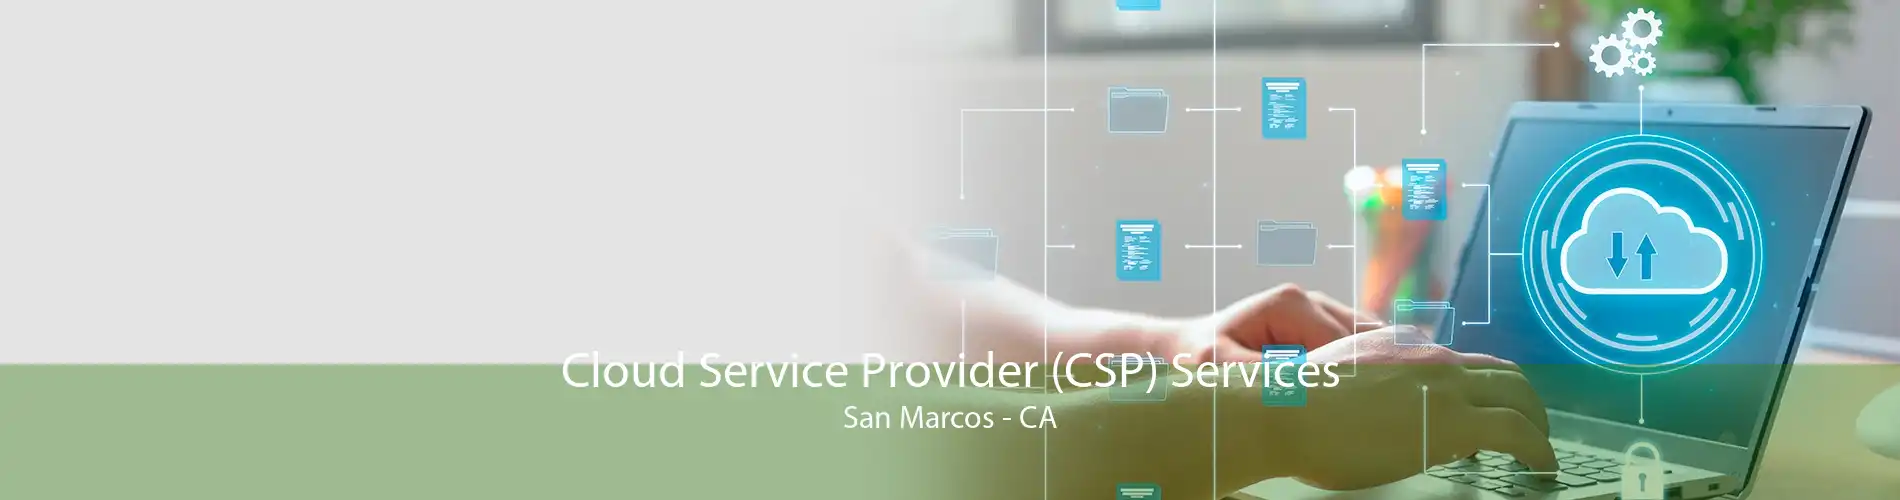 Cloud Service Provider (CSP) Services San Marcos - CA